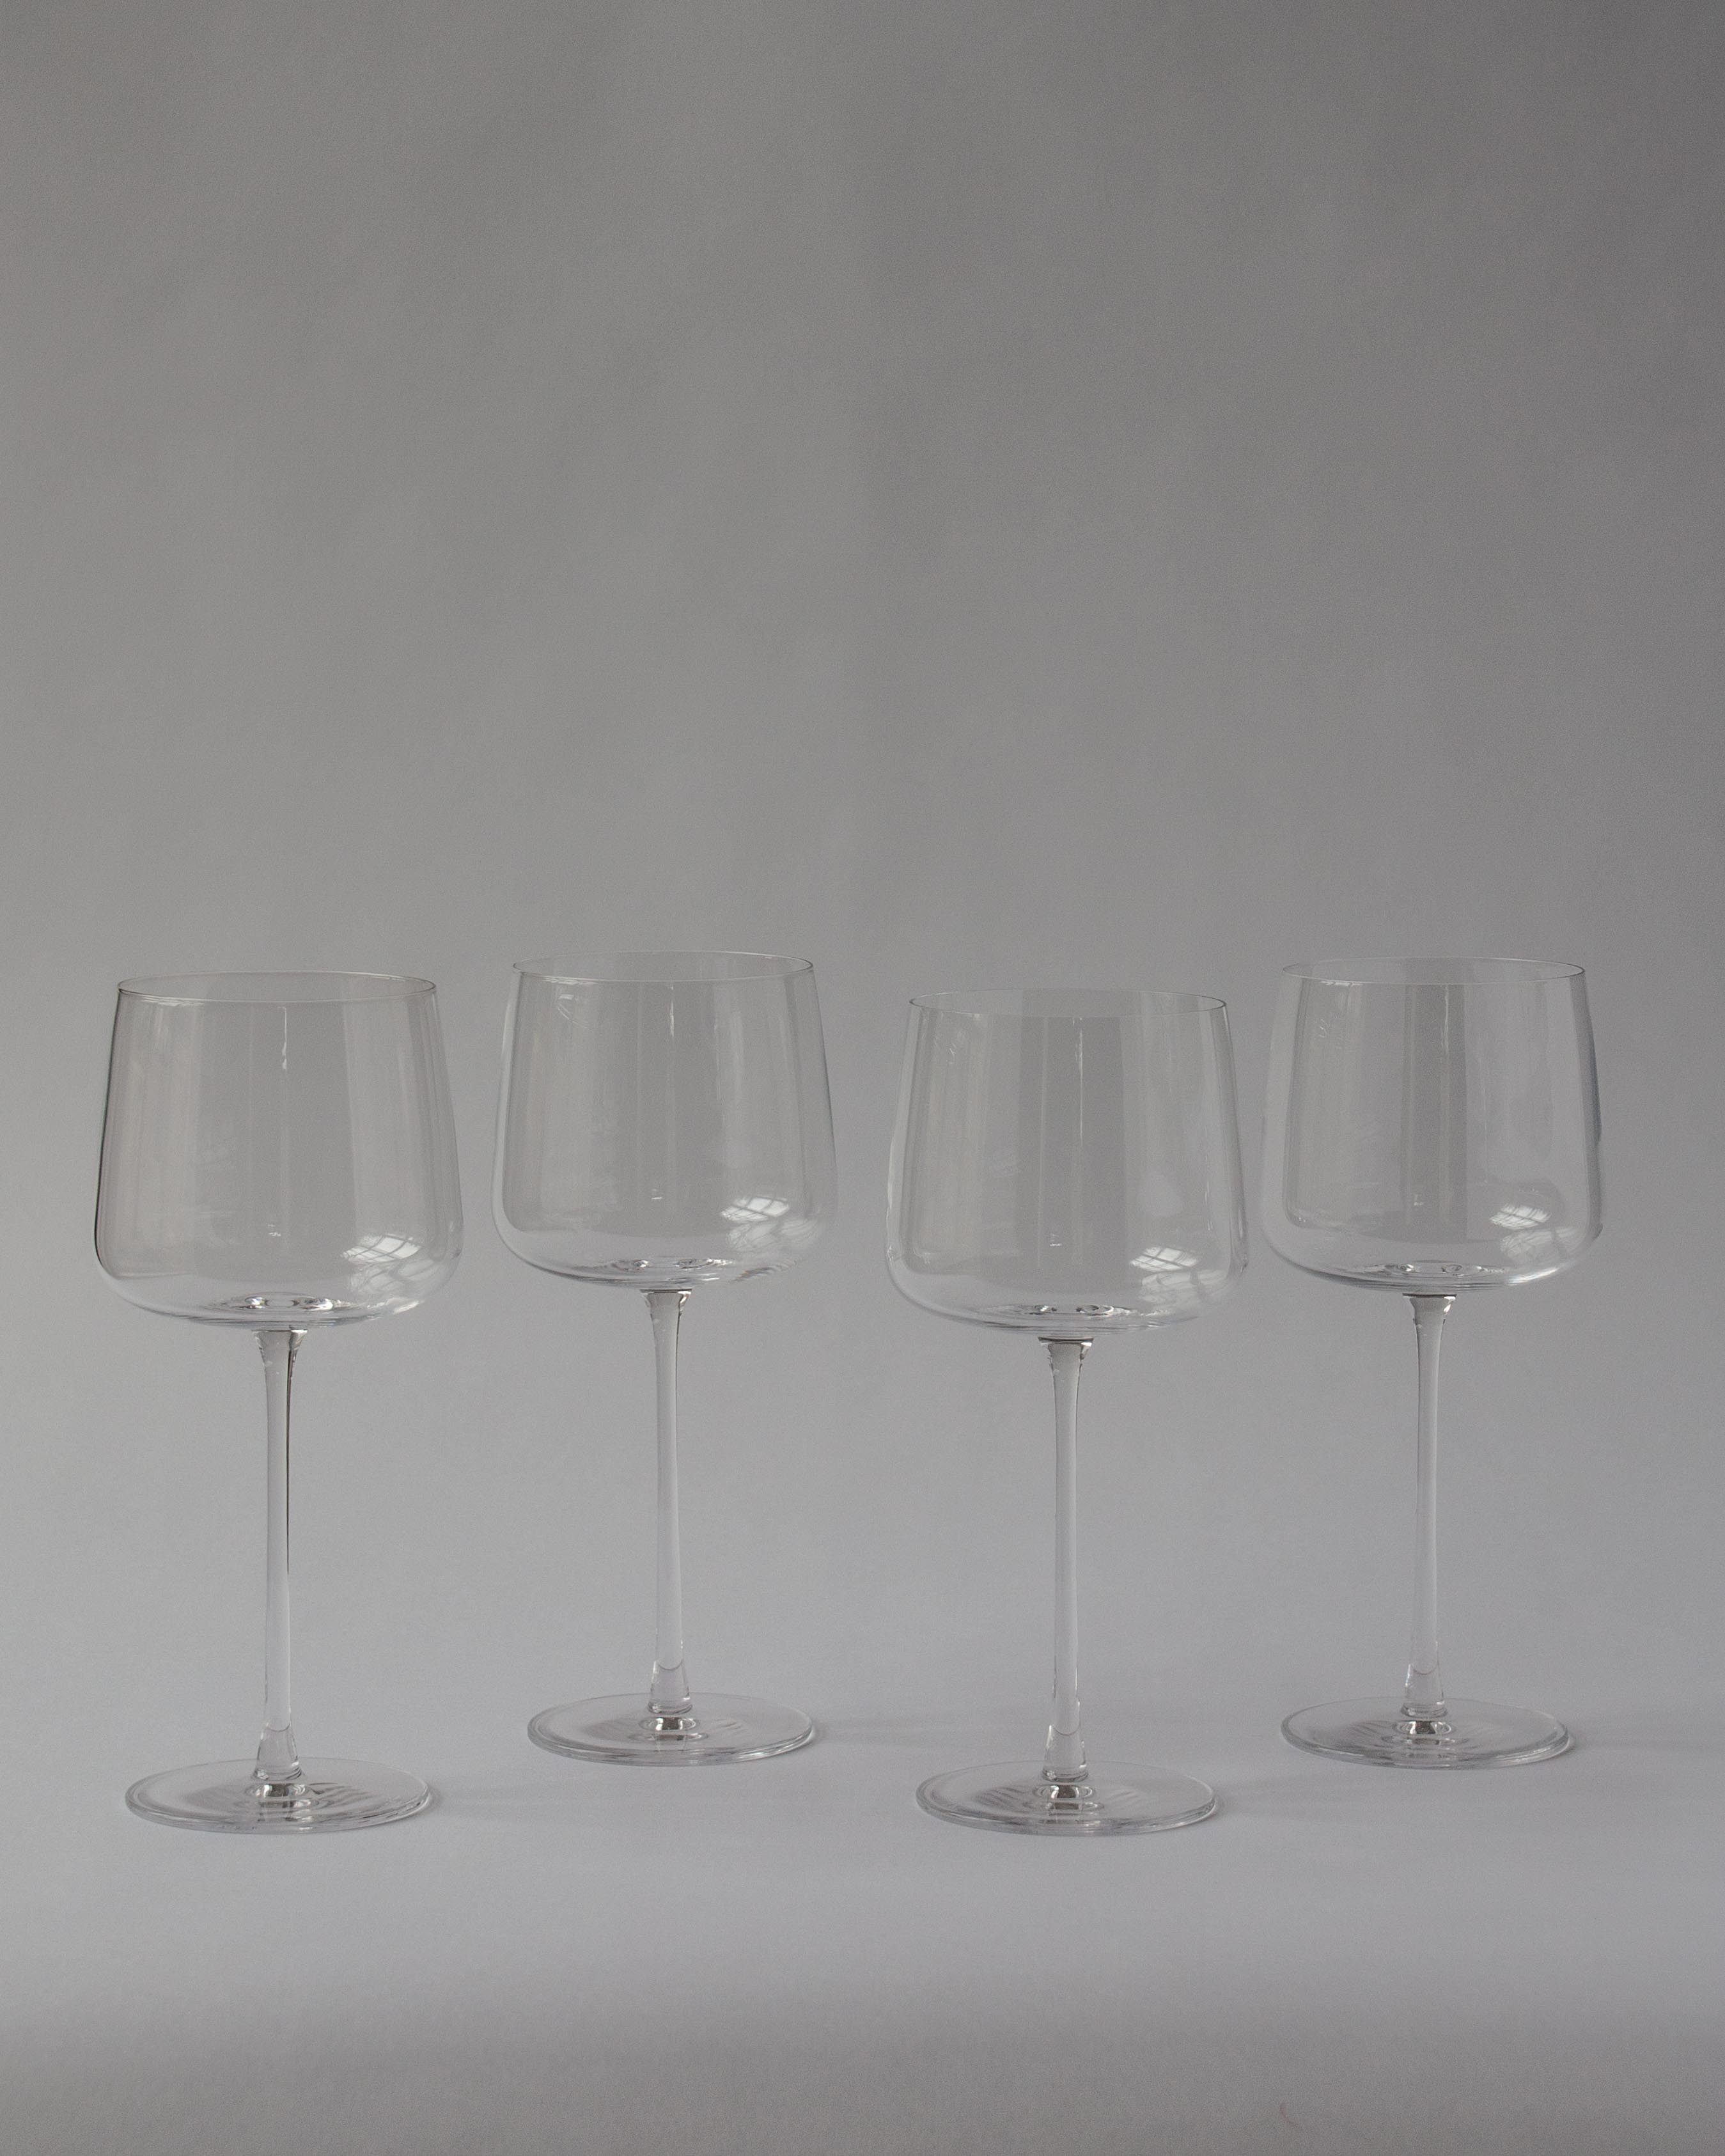 Metropolitan Red Wine Glass - Set of 4 | Anboise